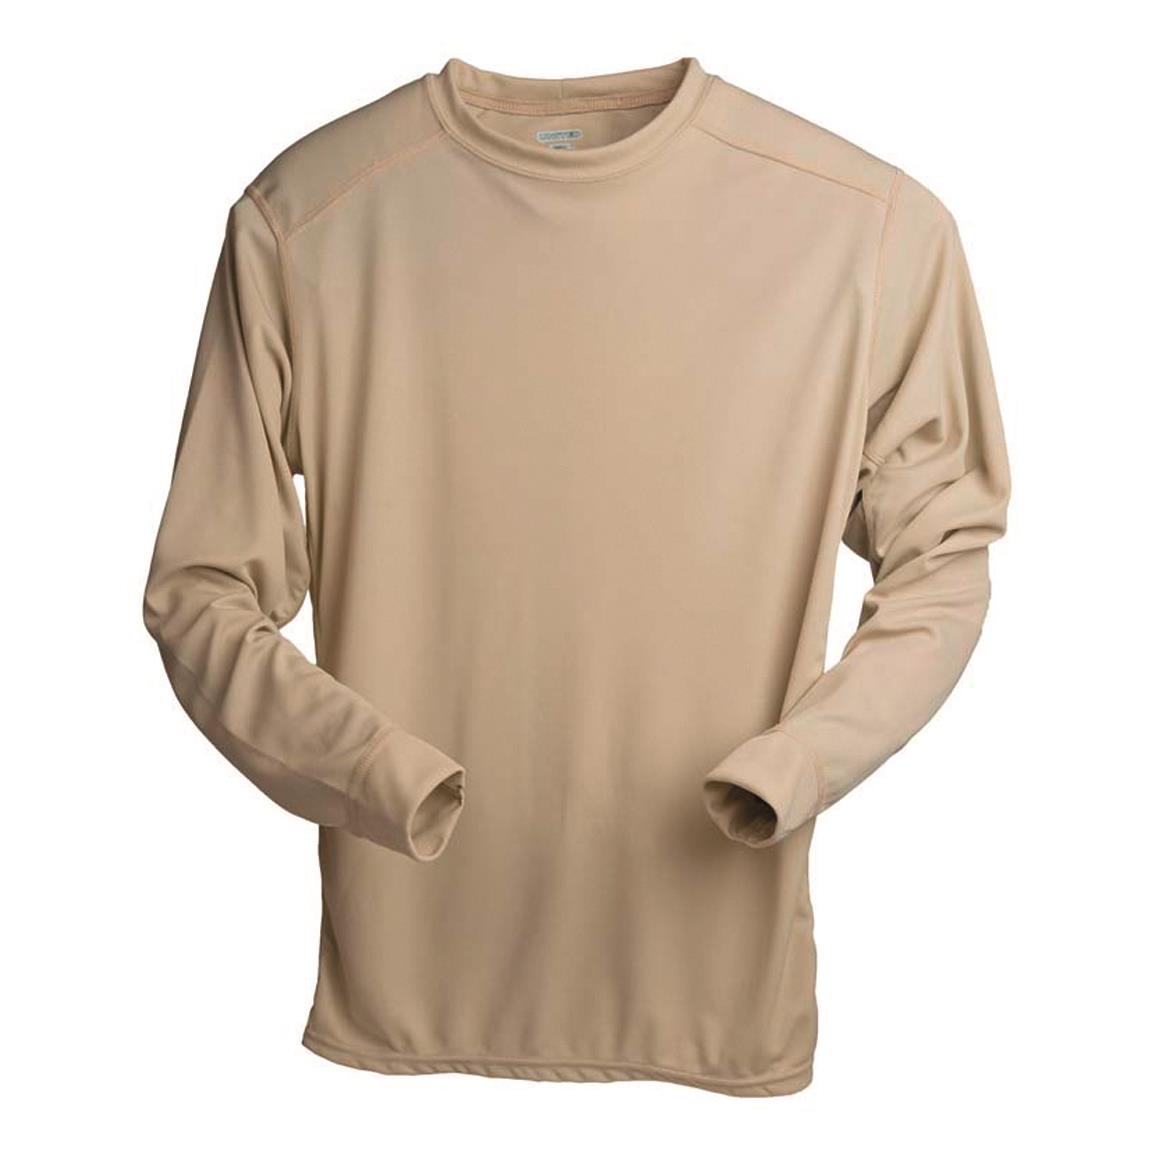 U.S. Military Surplus Fortiflame Layer 4 ECW Long-sleeve Shirt, New, Sand